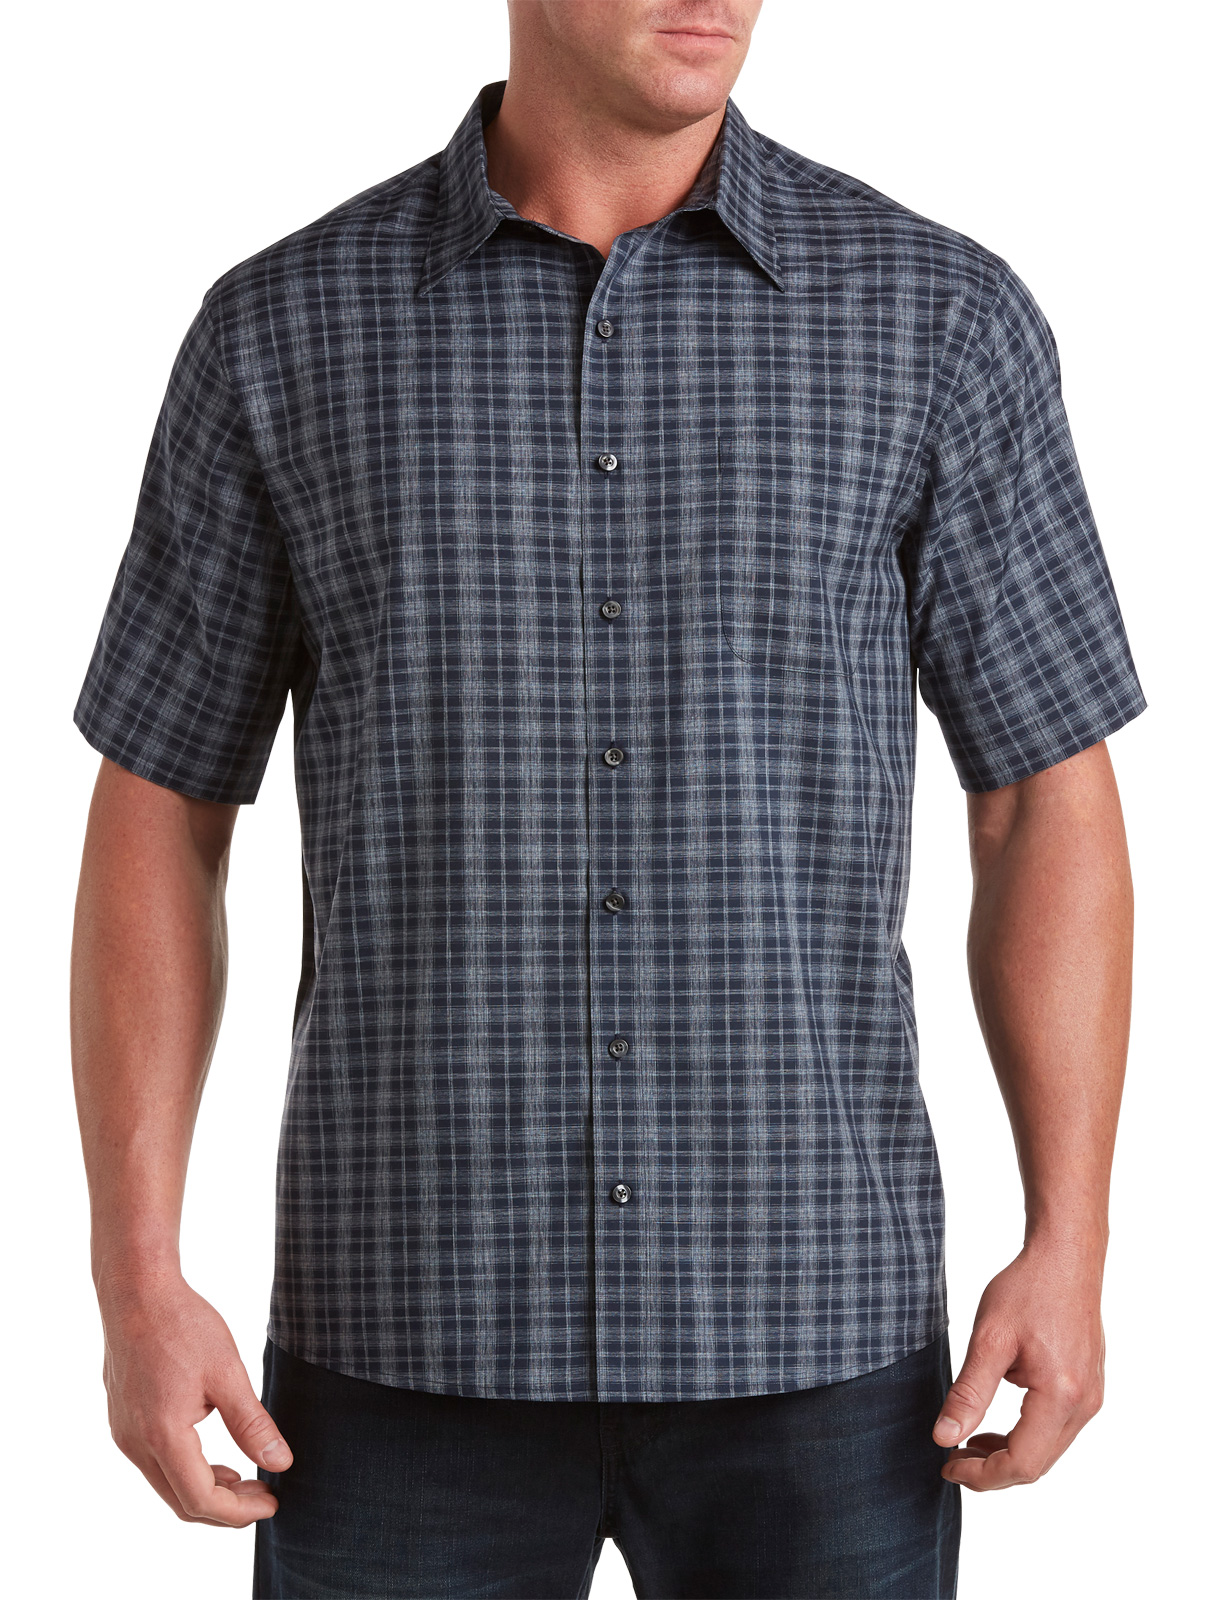 Synrgy Men's Big and Tall Medium Plaid Microfiber Sport Shirt ...